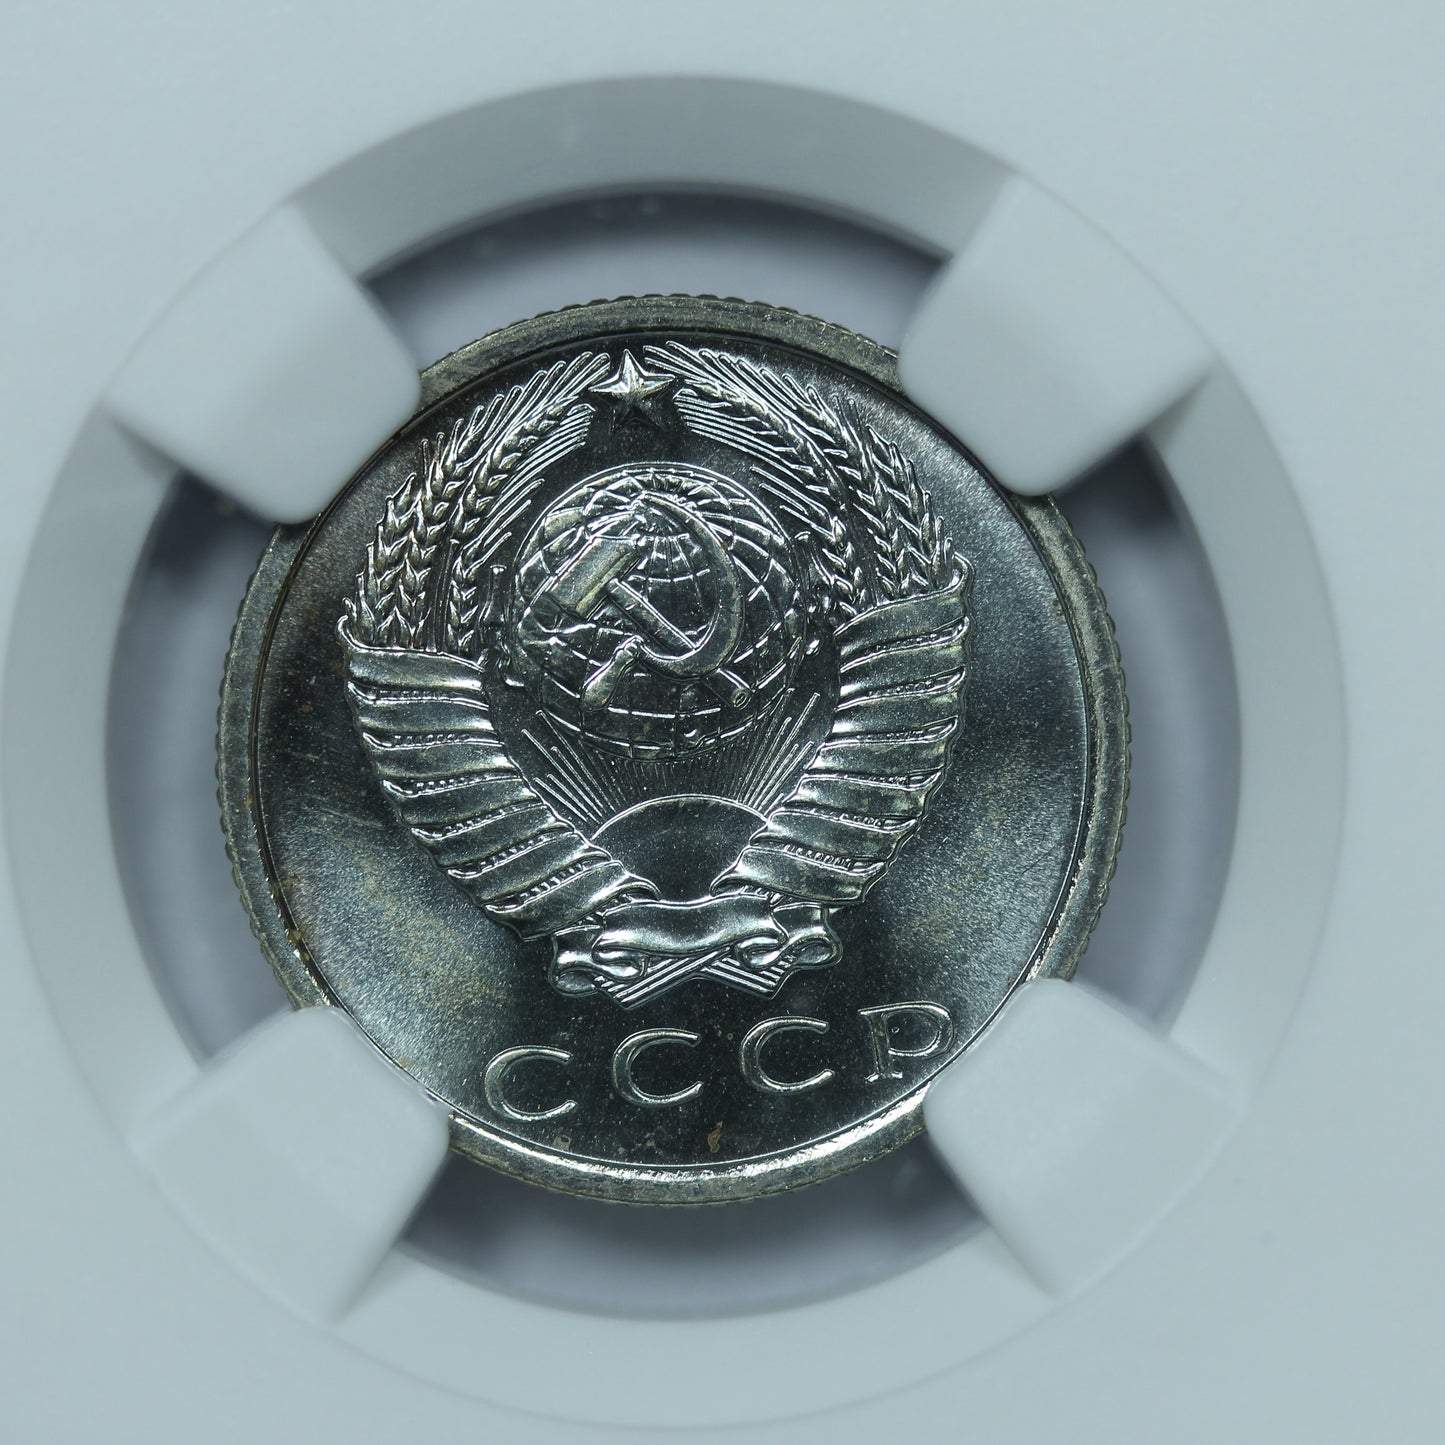 1969 Russia 15 Kopeks Russian Soviet USSR CCCP Coin - NGC Certified PL 66